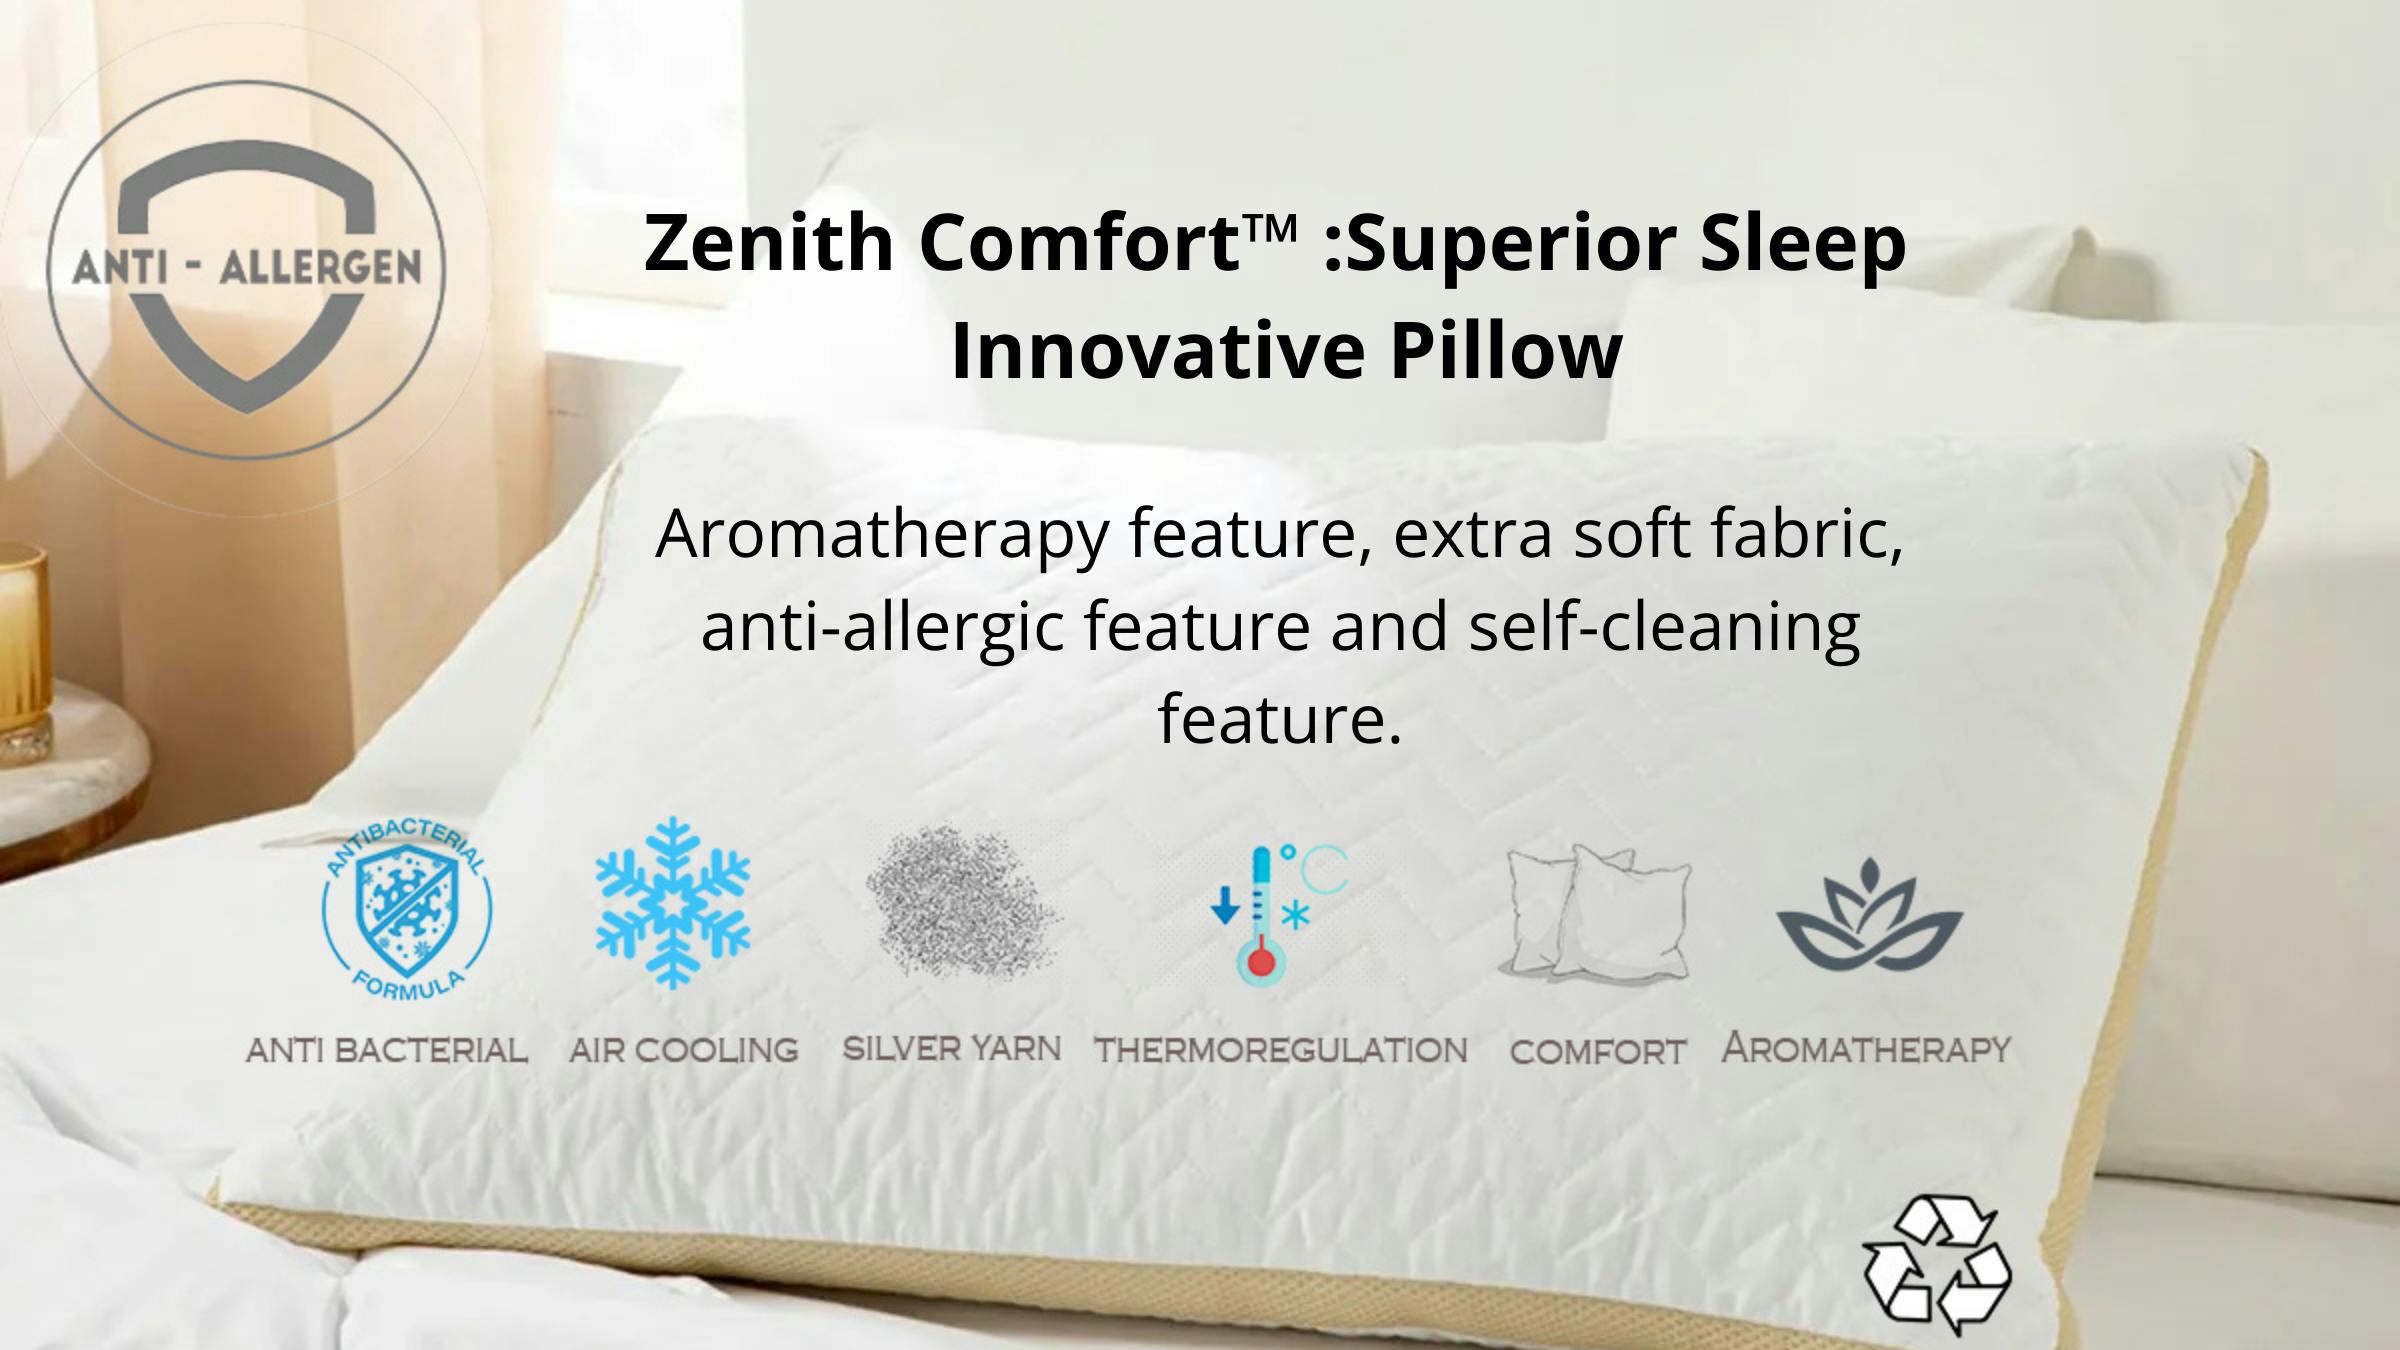 Zenith Comfort™ :Superior Sleep Innovative Pillow